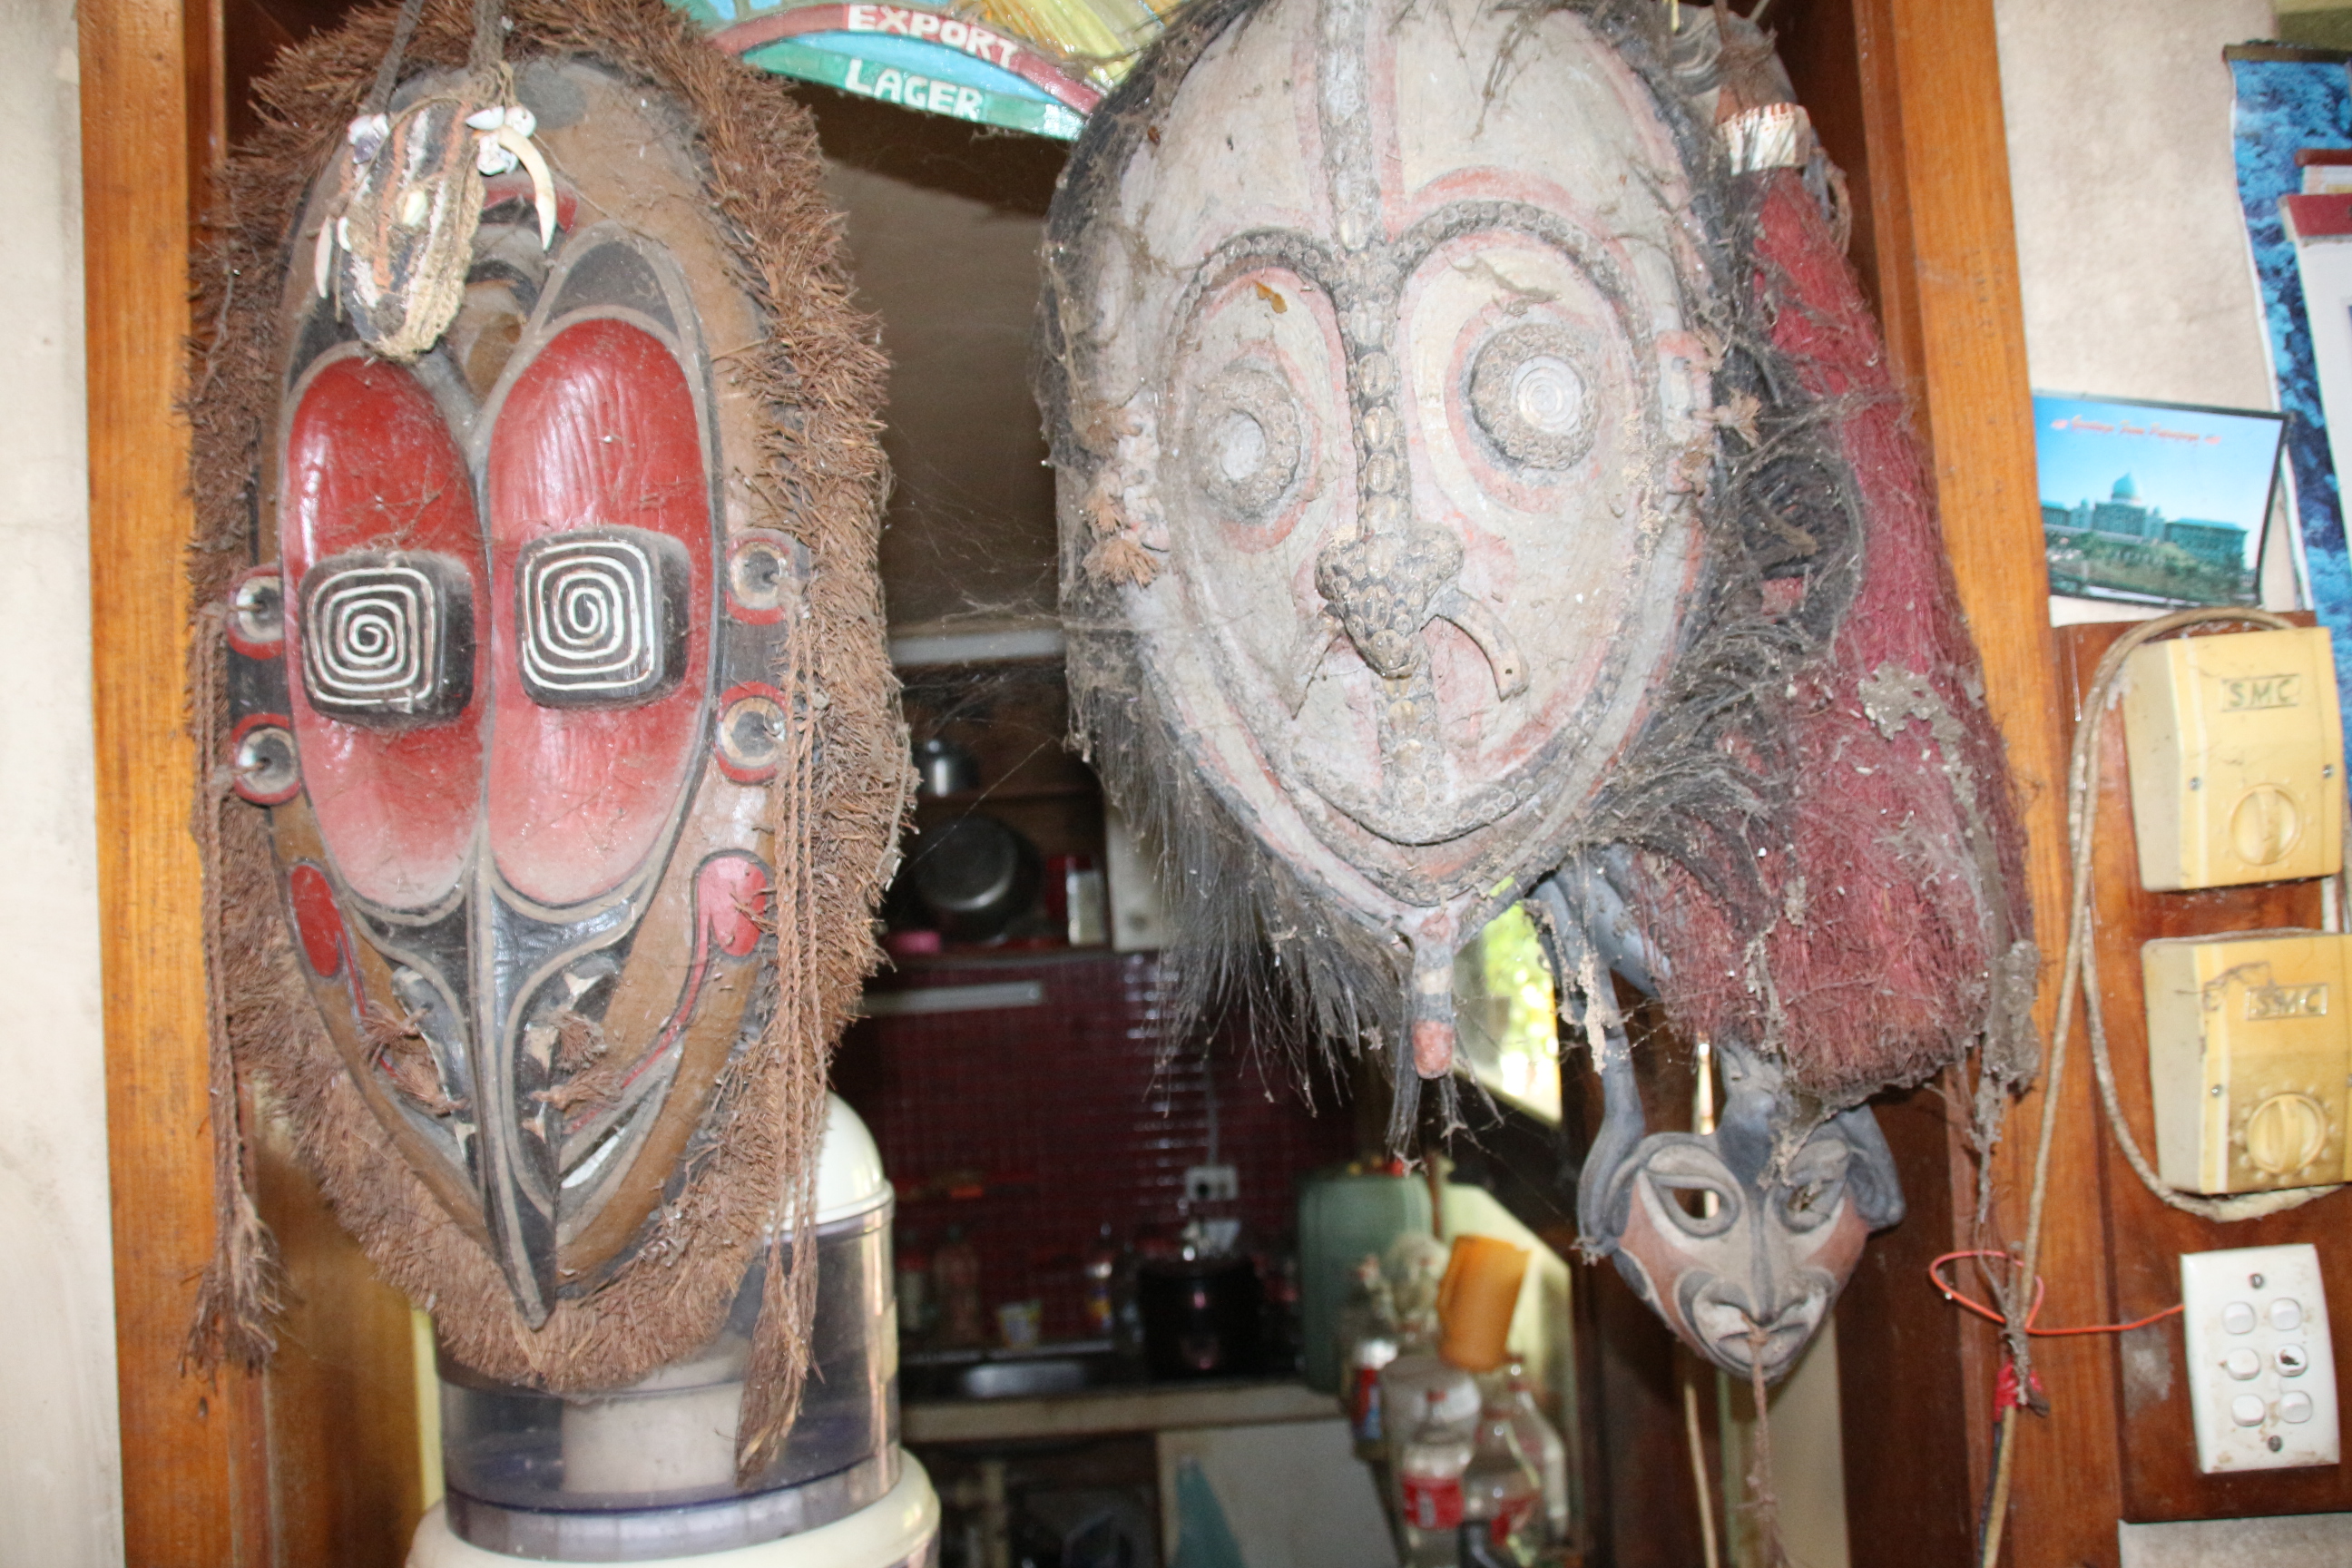 More famous masks at Uball home.